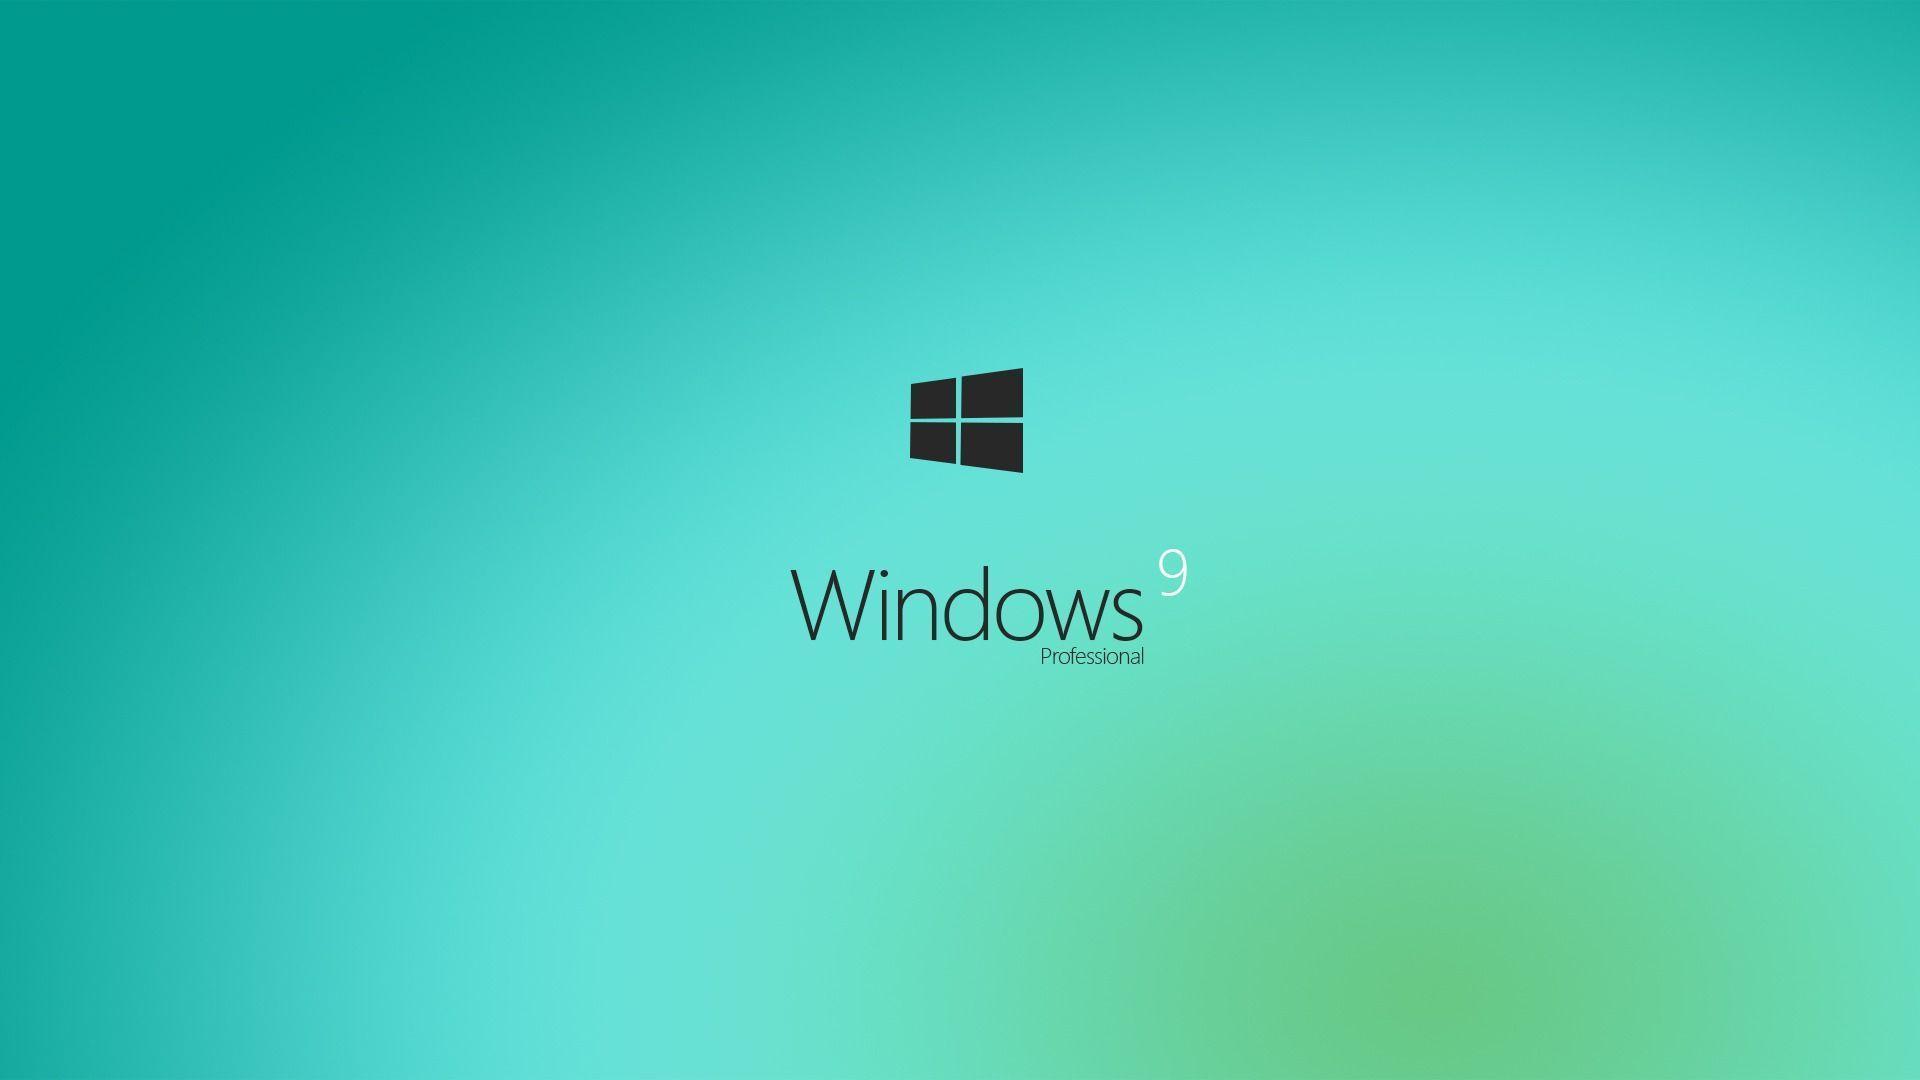 Windows 9 Wallpaper. Windows 9 Background